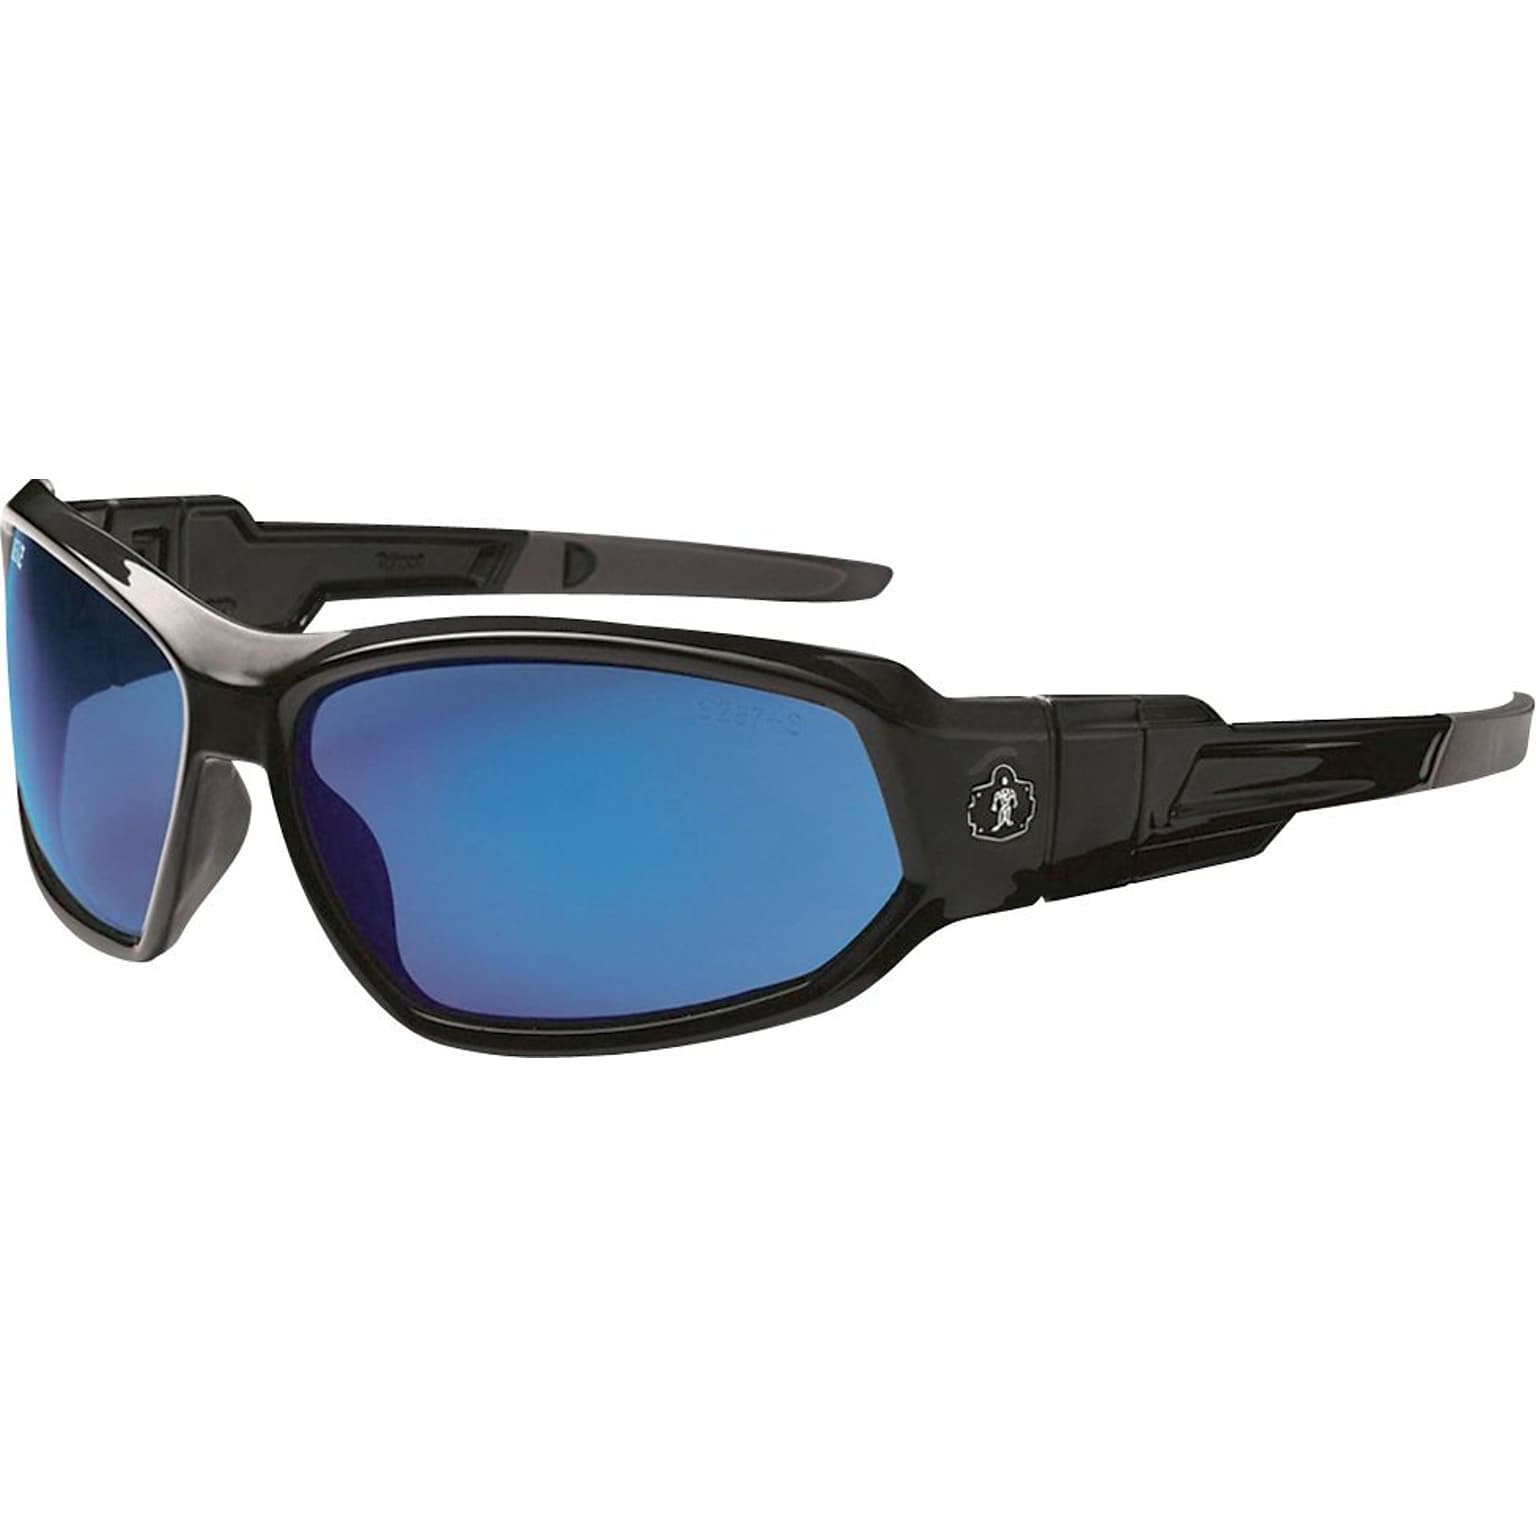 Ergodyne Skullerz® Loki Safety Glasses, Black/Blue Mirror, Anti-Scratch/Fog